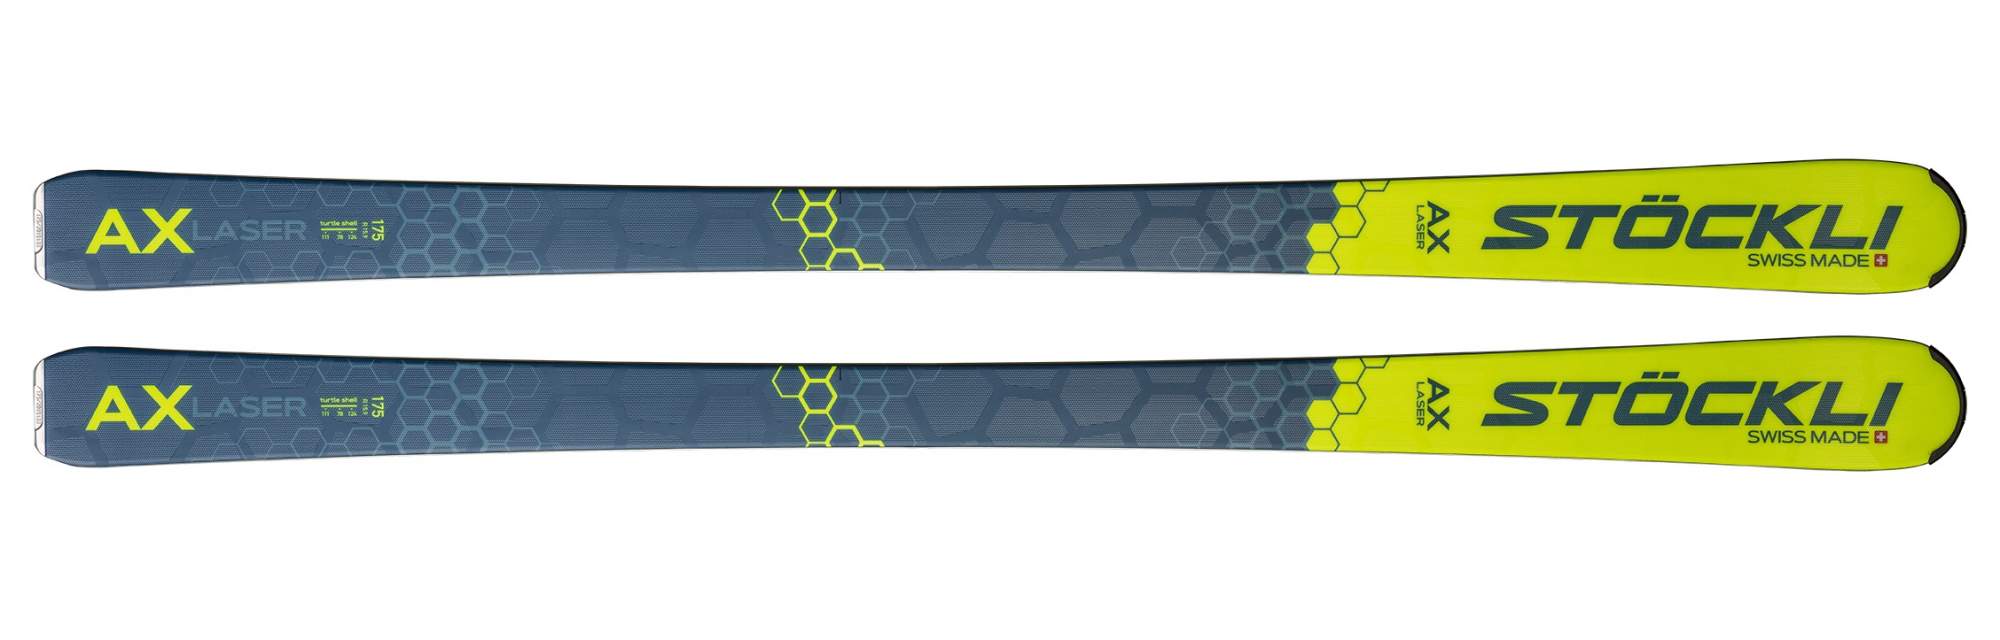 Горные лыжи Stockli Laser AX + Attack 13 AT 2022 blue/yellow, 168 см